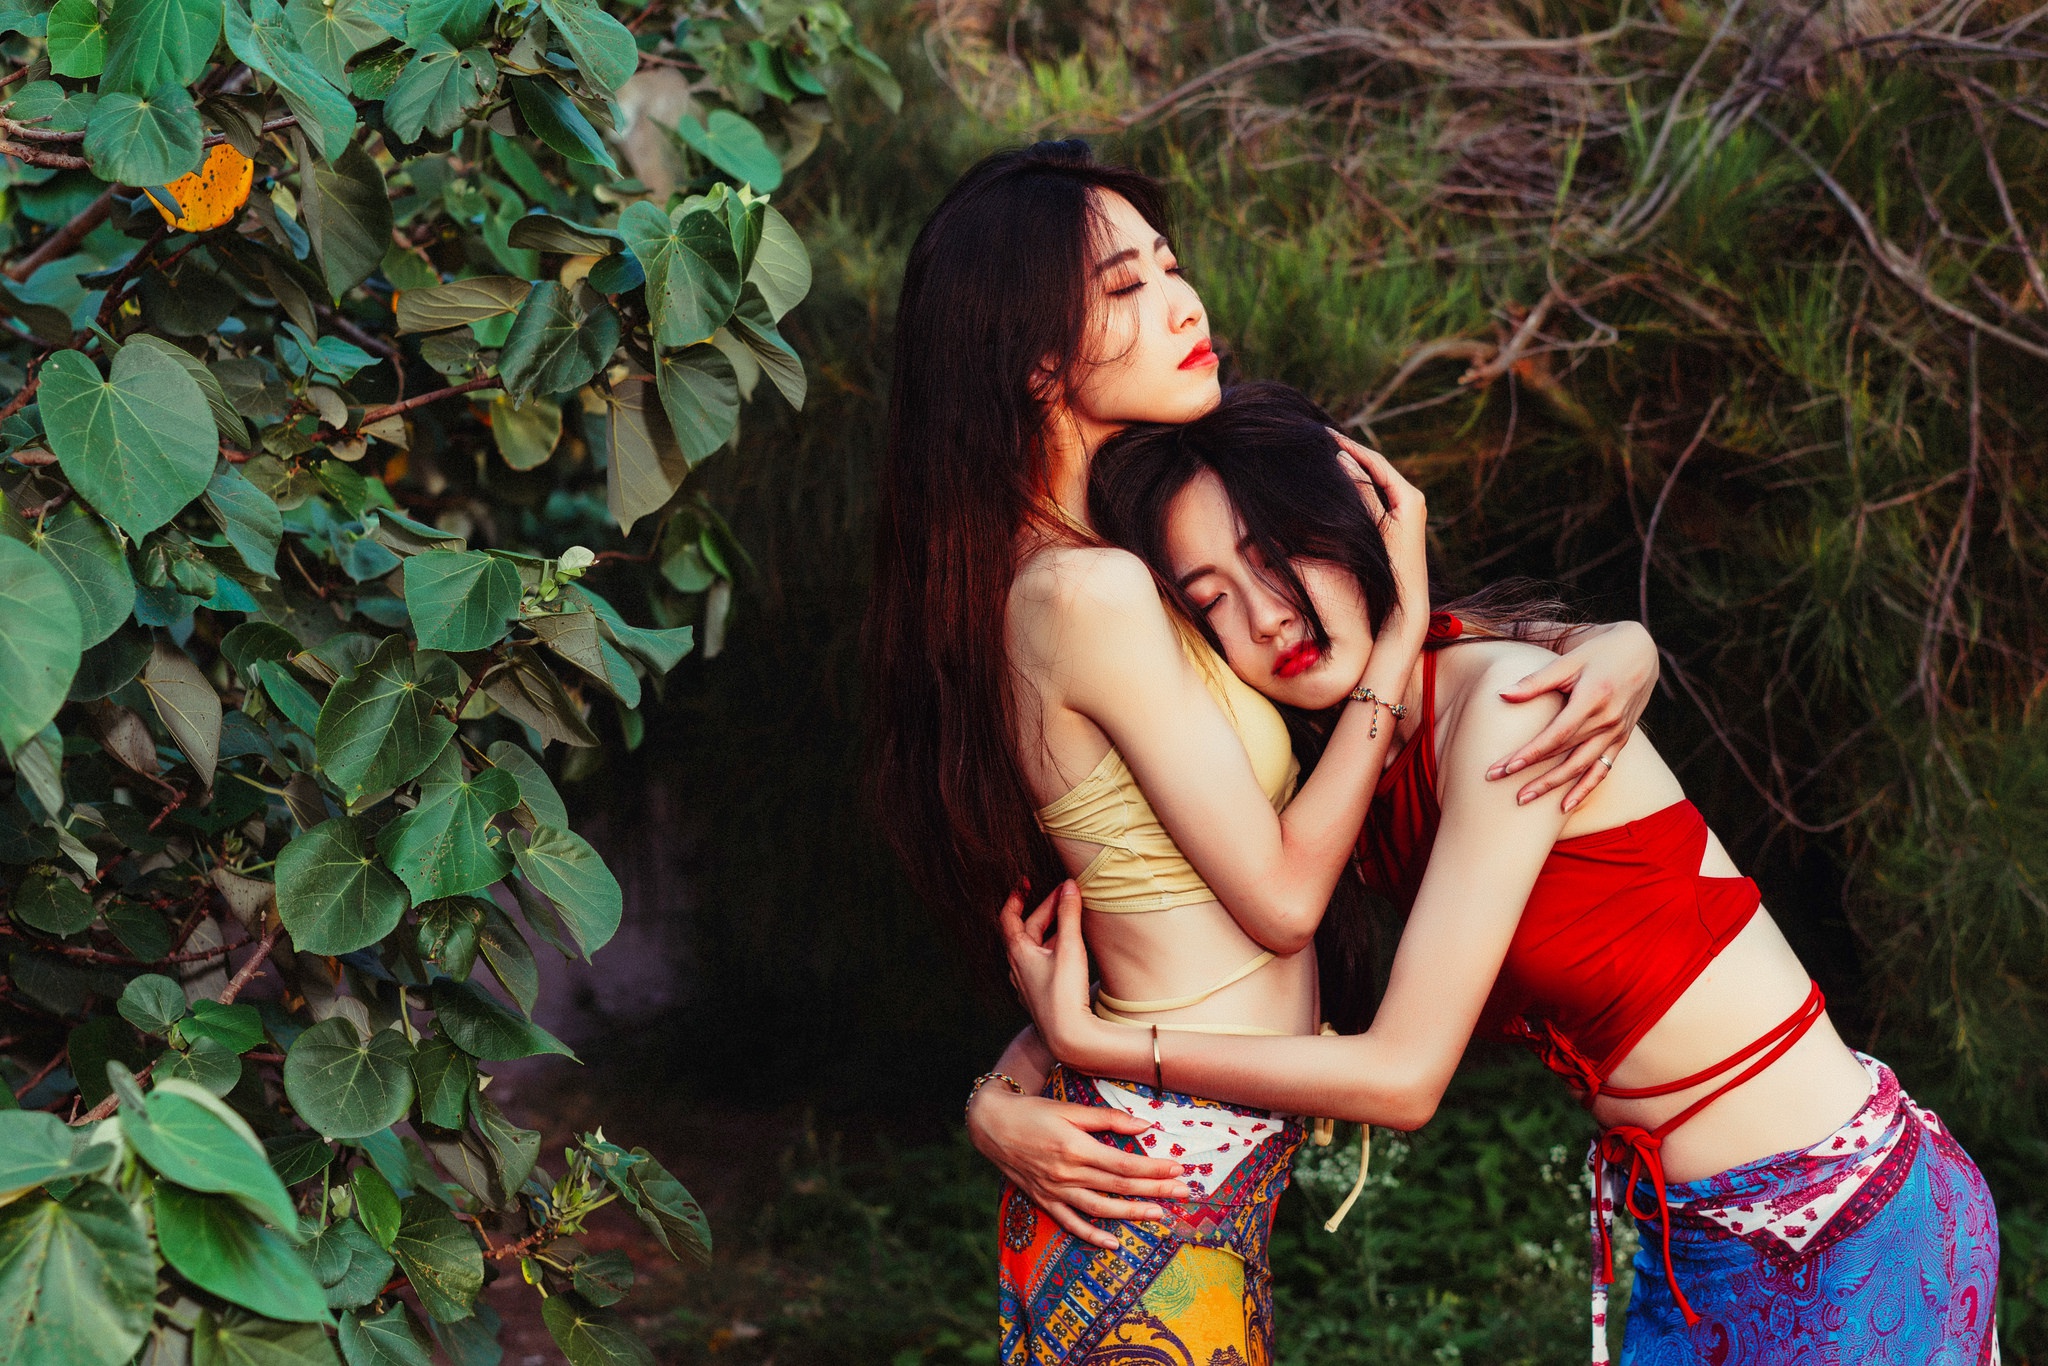 Lesbian indonesia. Девушки обнимаются. Фотосессия двух девушек. Две девушки в обнимку. Объятия двух девушек.